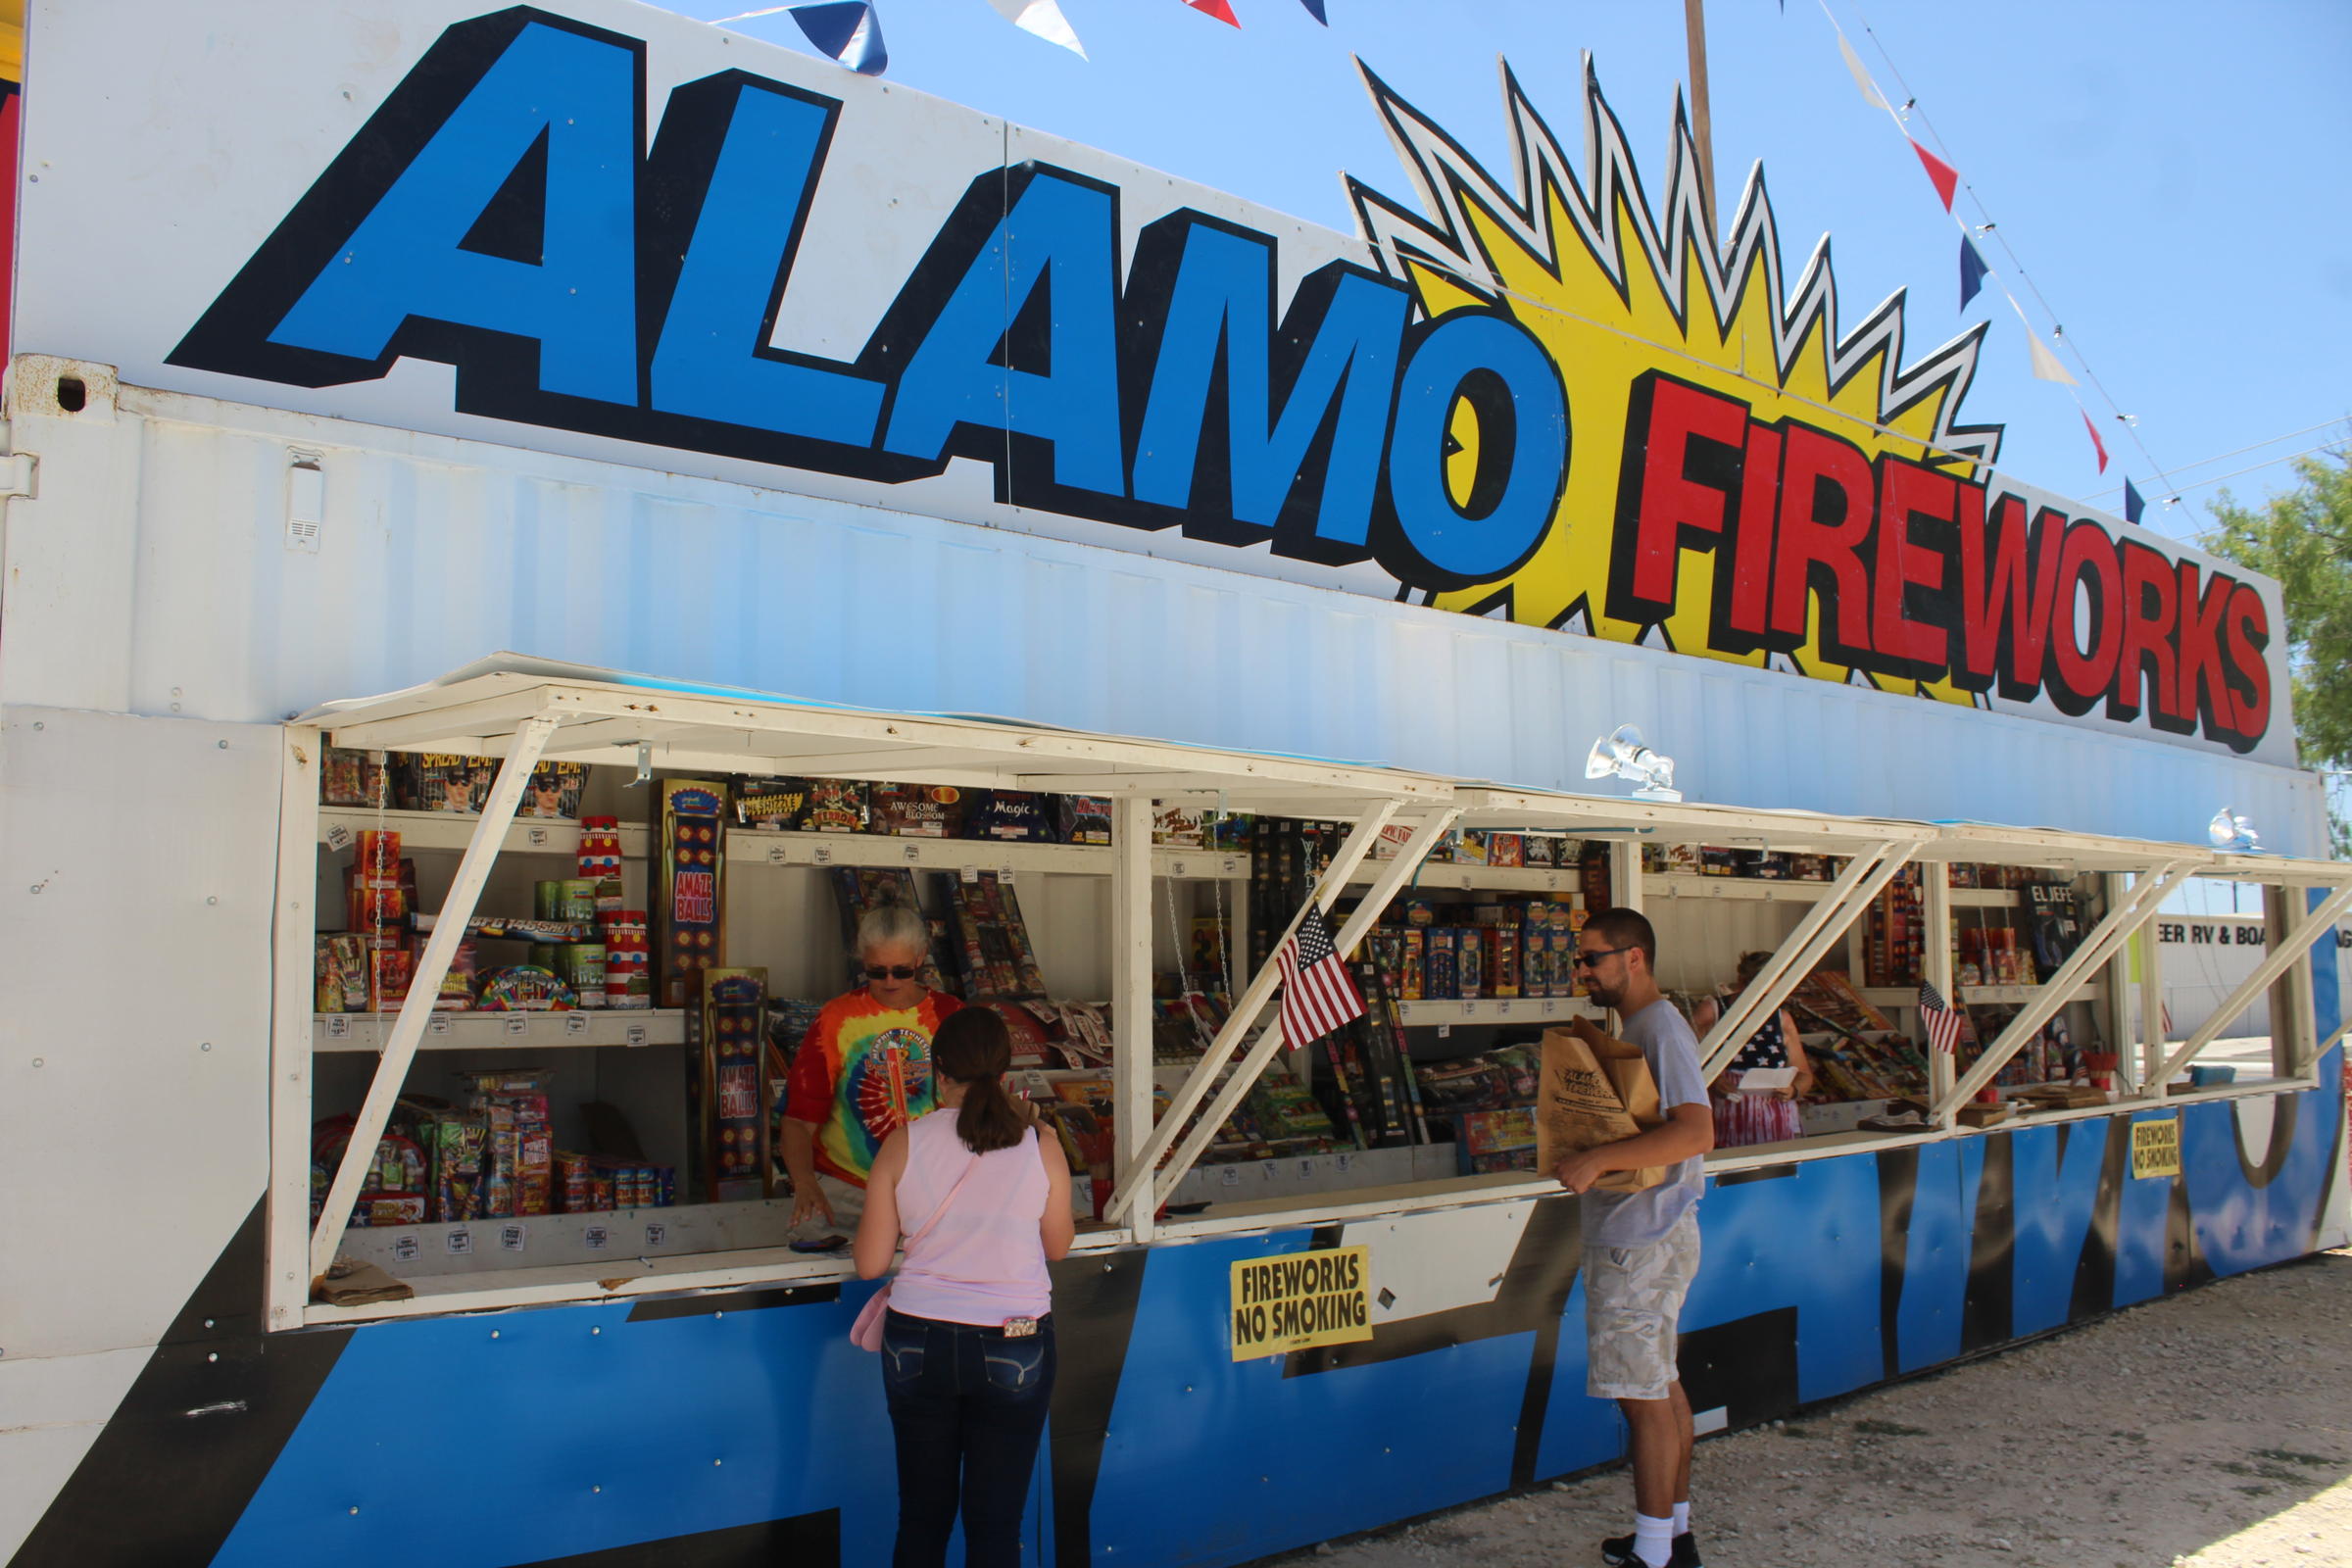 Fireworks Safety A High Priority For San Antonio Area Texas Public Radio